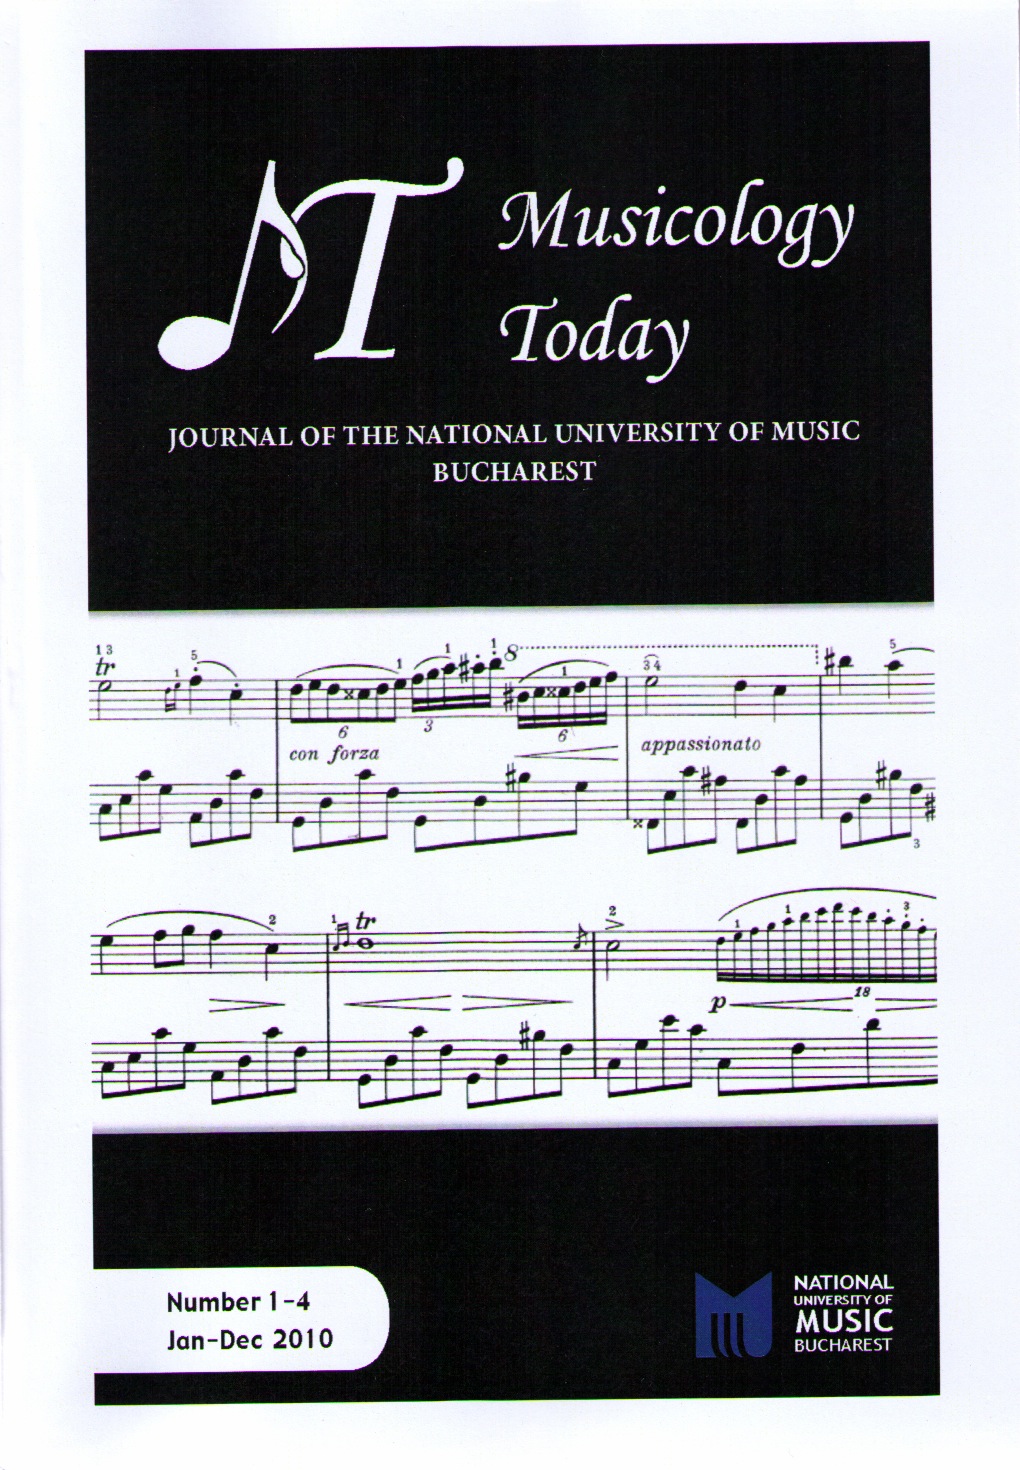 Musicians celebrated in 2009 and 2010: Felix Mendelssohn-Bartholdy, Paul Constantinescu, Nicolae Brânduș, Frédéric Chopin